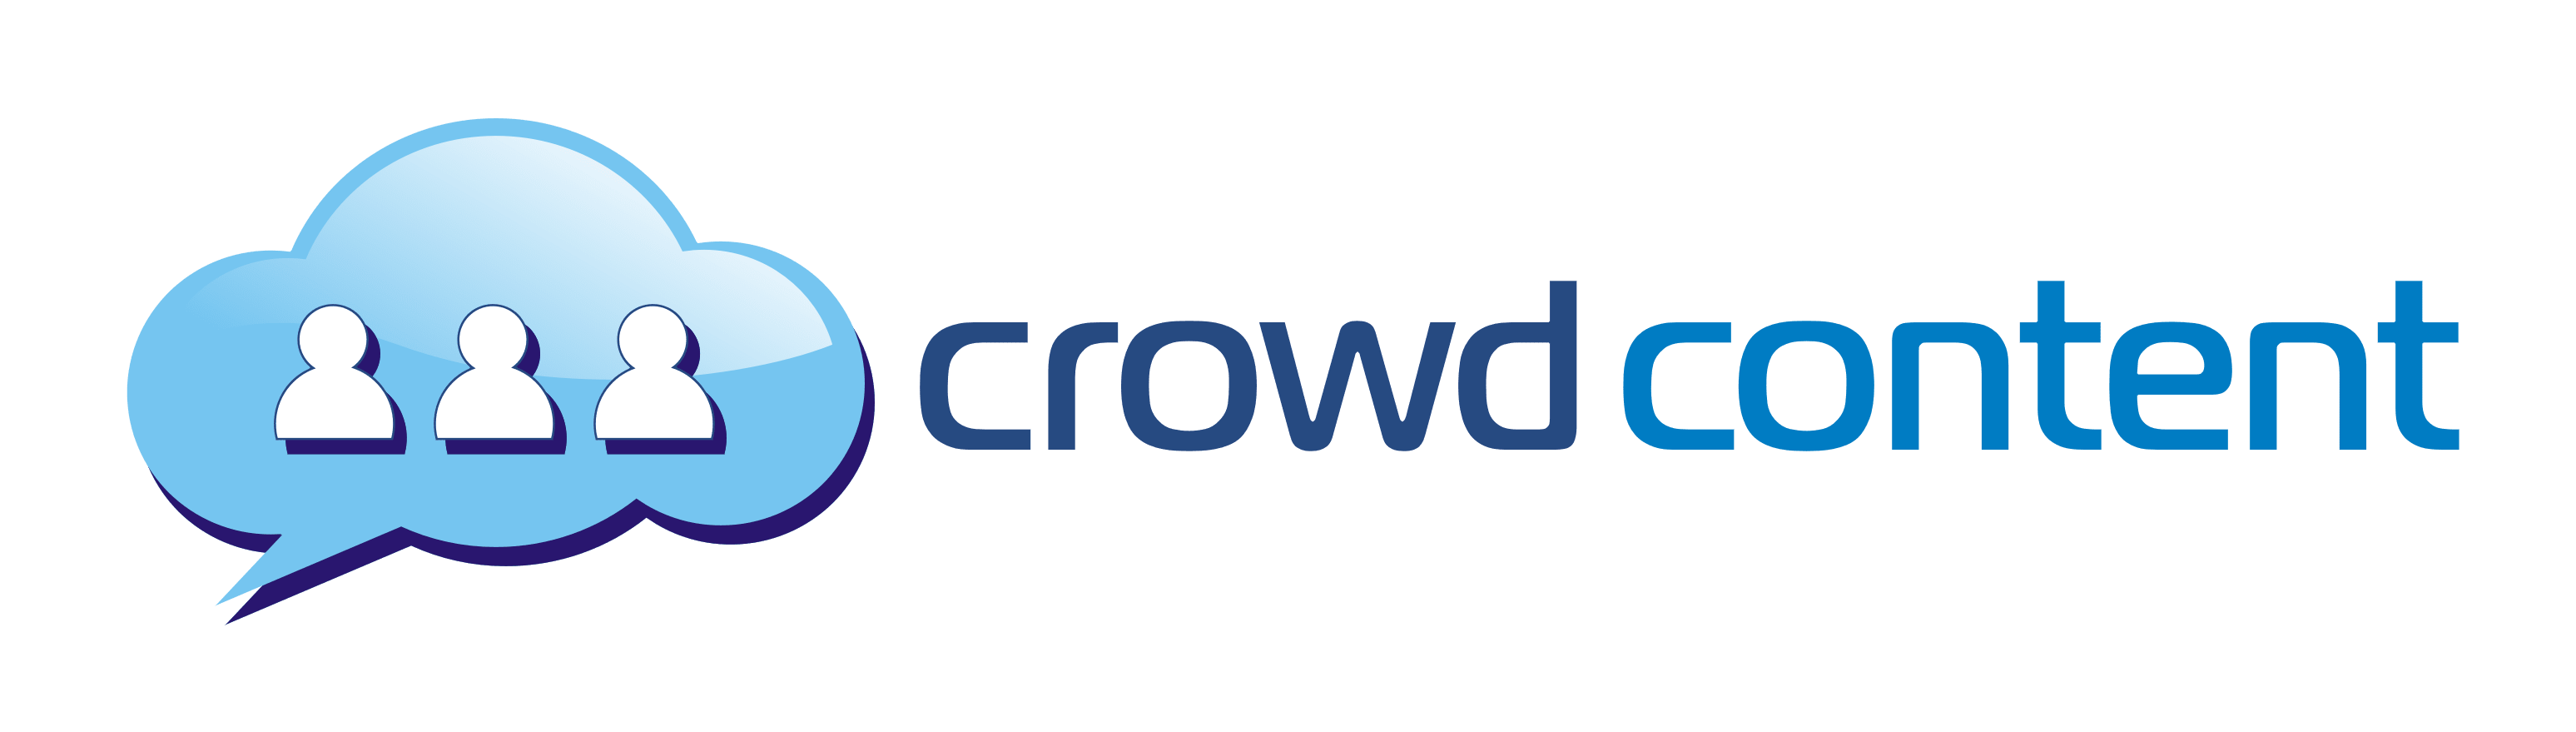 Crowd Content-icon